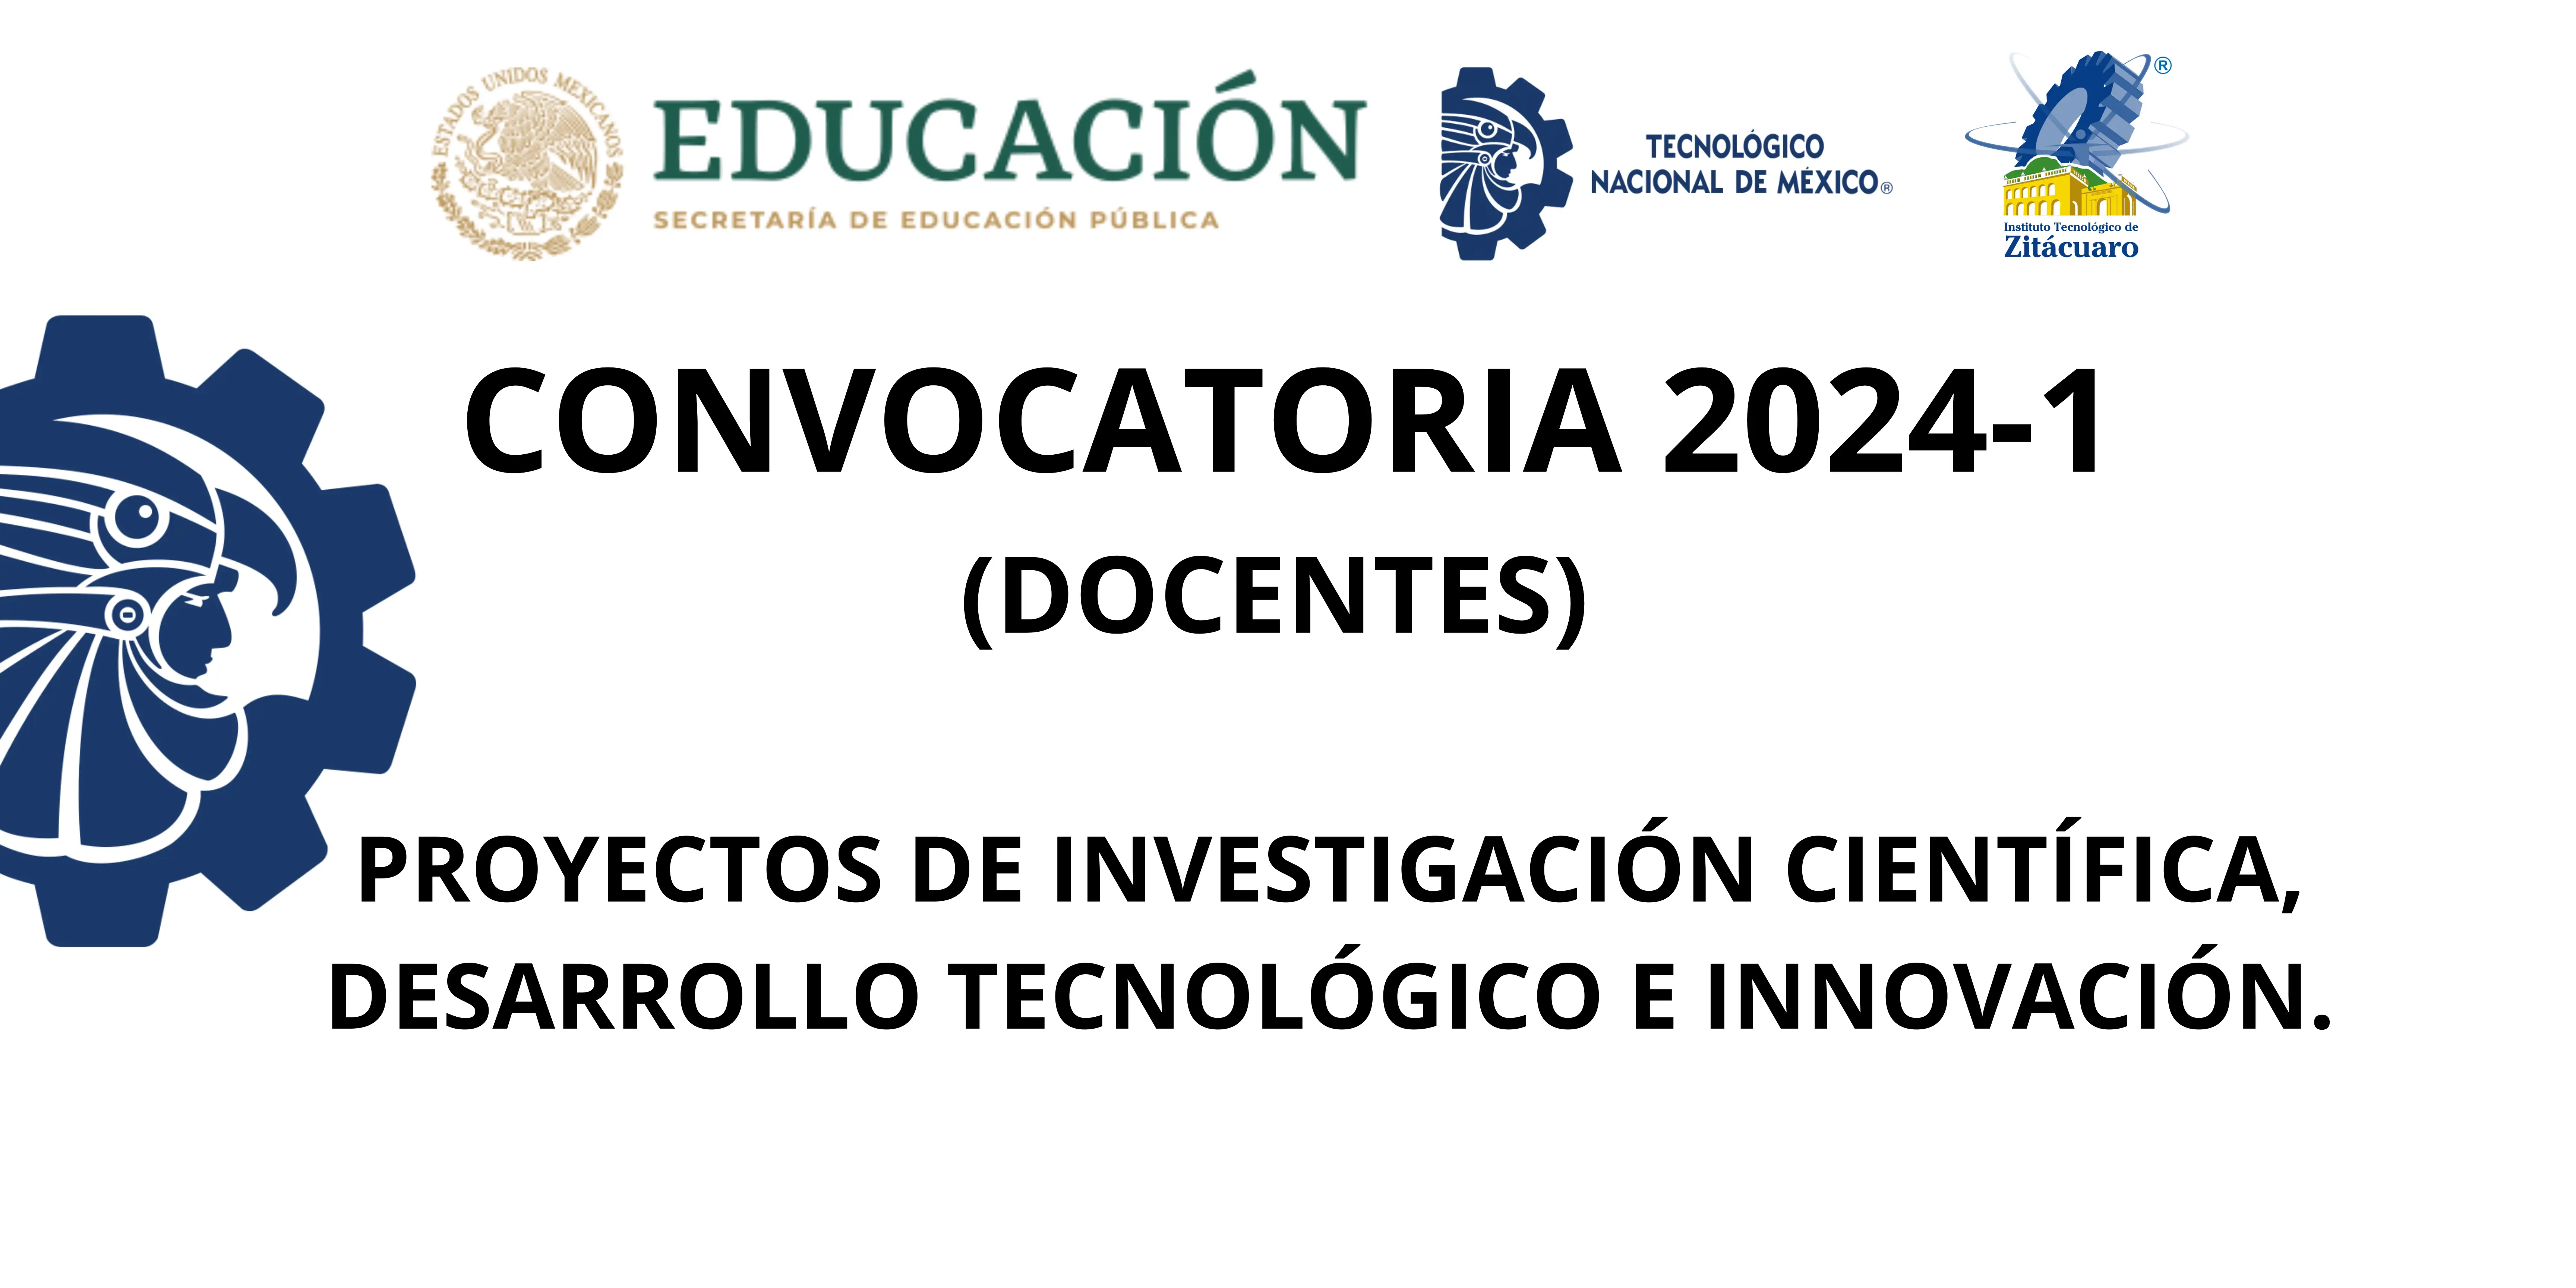 PROYECTOS DE INVESTIGACIÓN CIENTÍFICA,  DESARROLLO TECNOLÓGICO E INNOVACIÓN. CONVOCATORIA 2024-1